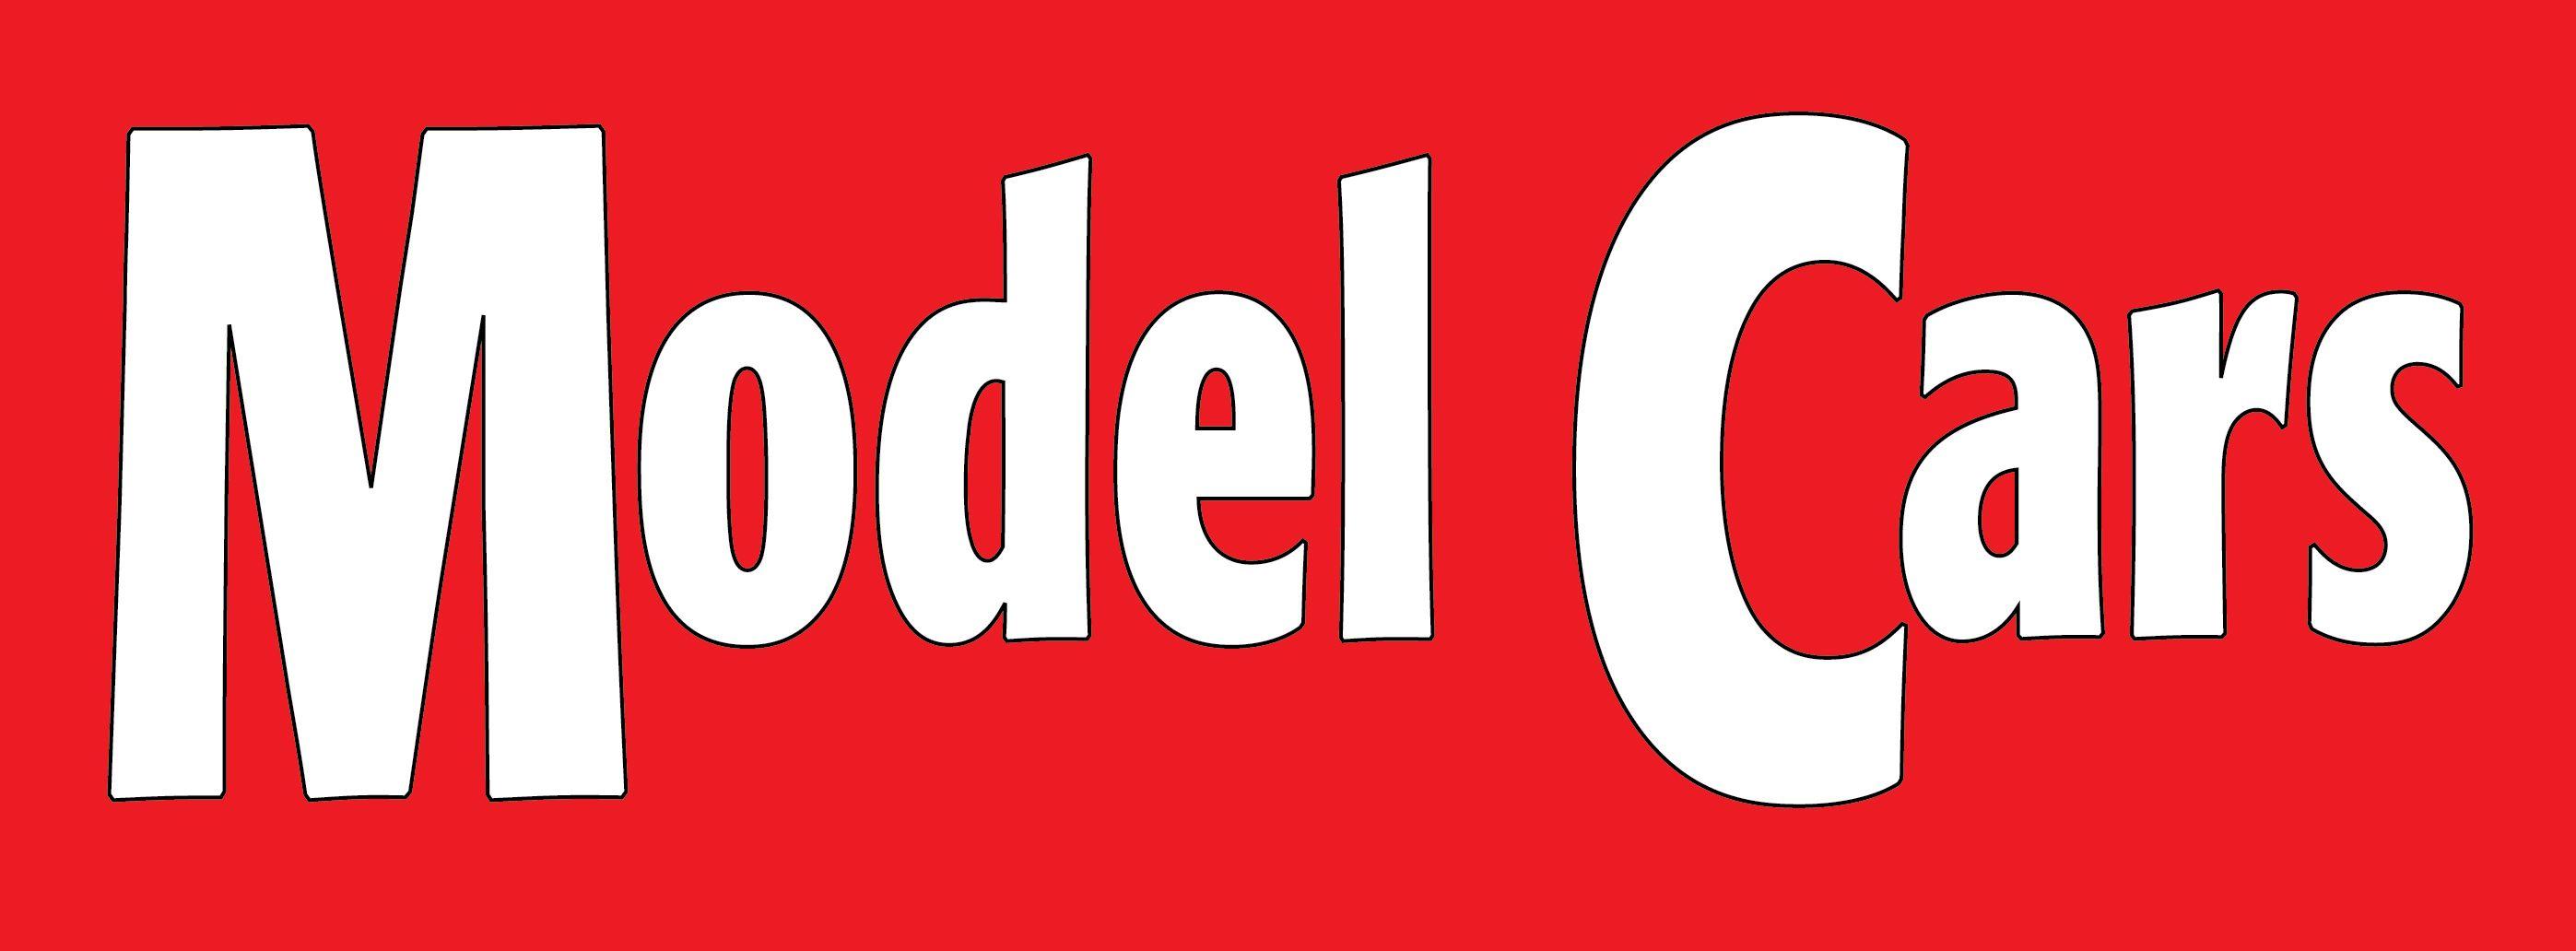 Automobile Model Logo - Car magazine Logos